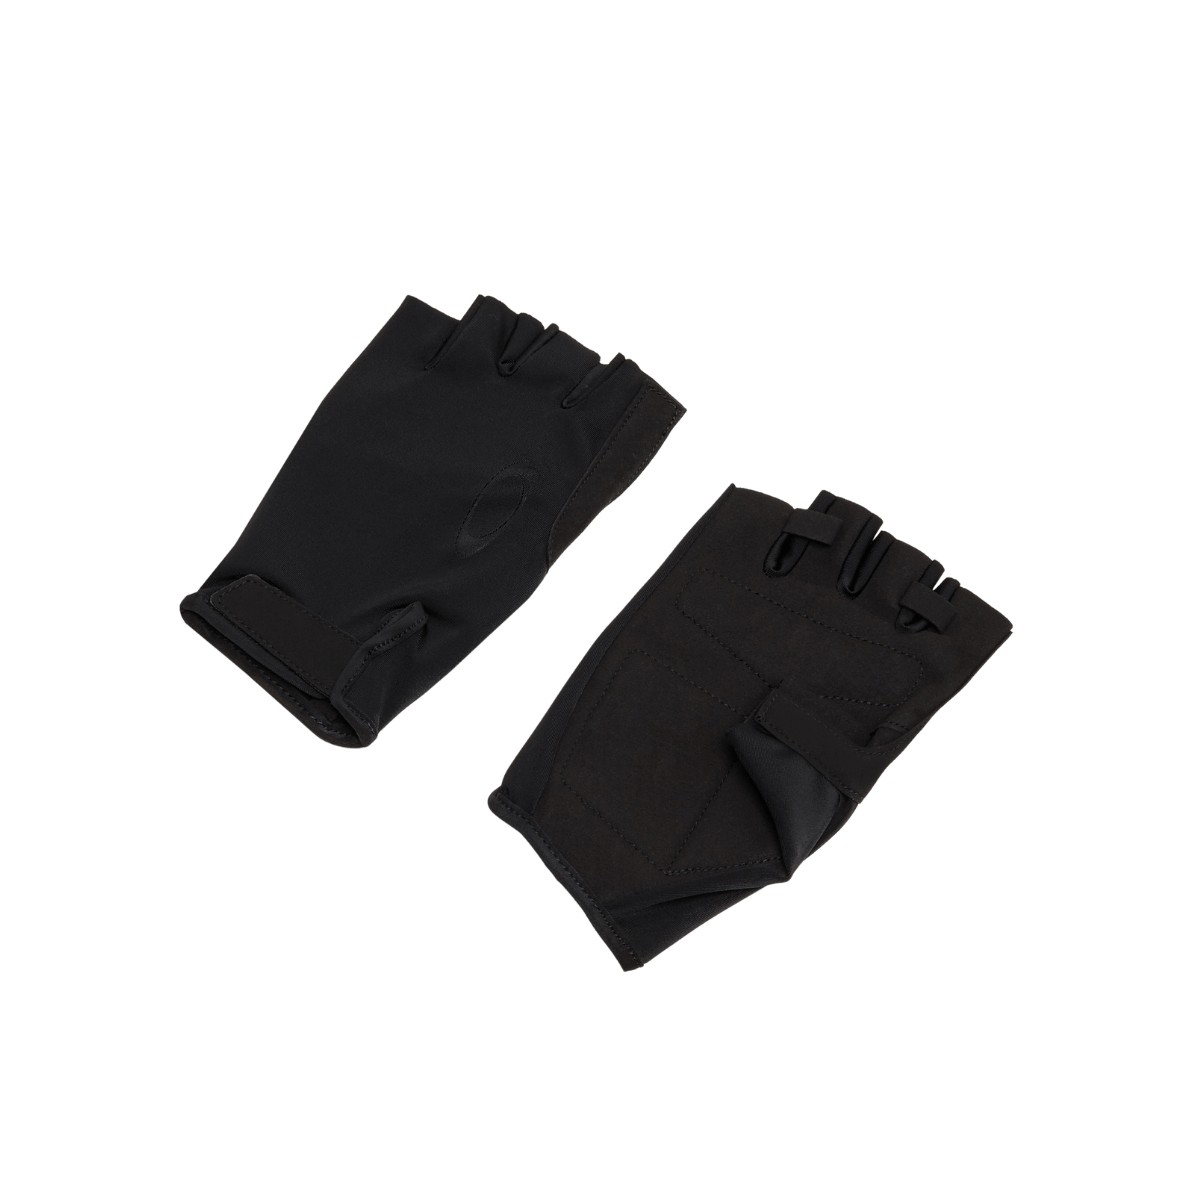 Oakley 2.0 Gloves Black, Size S/M